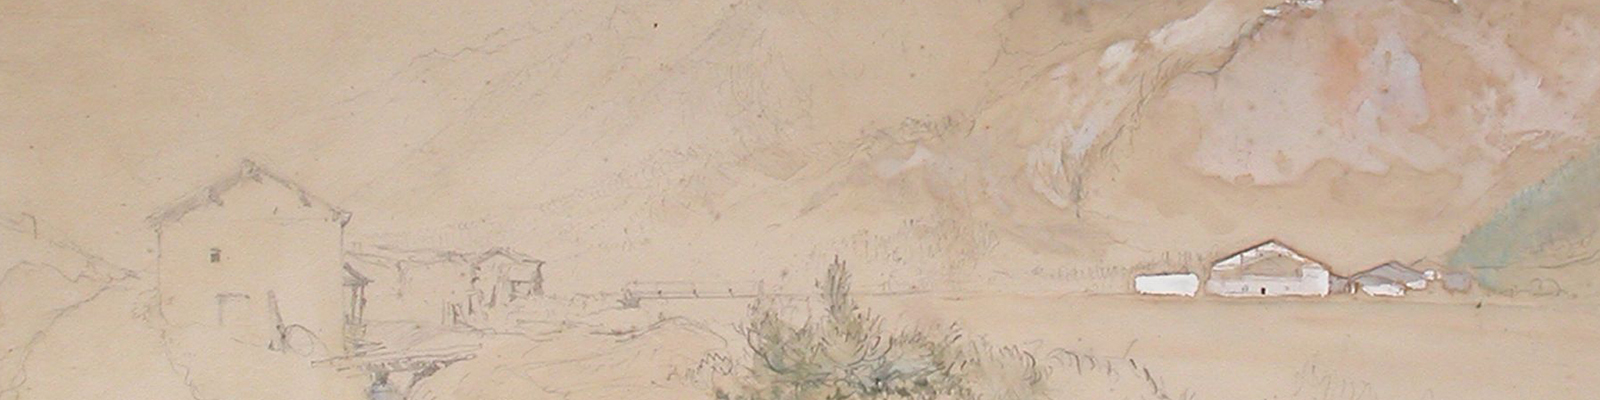 John Ruskin: Chamonix, looking towards the Glacier des Bois 1849